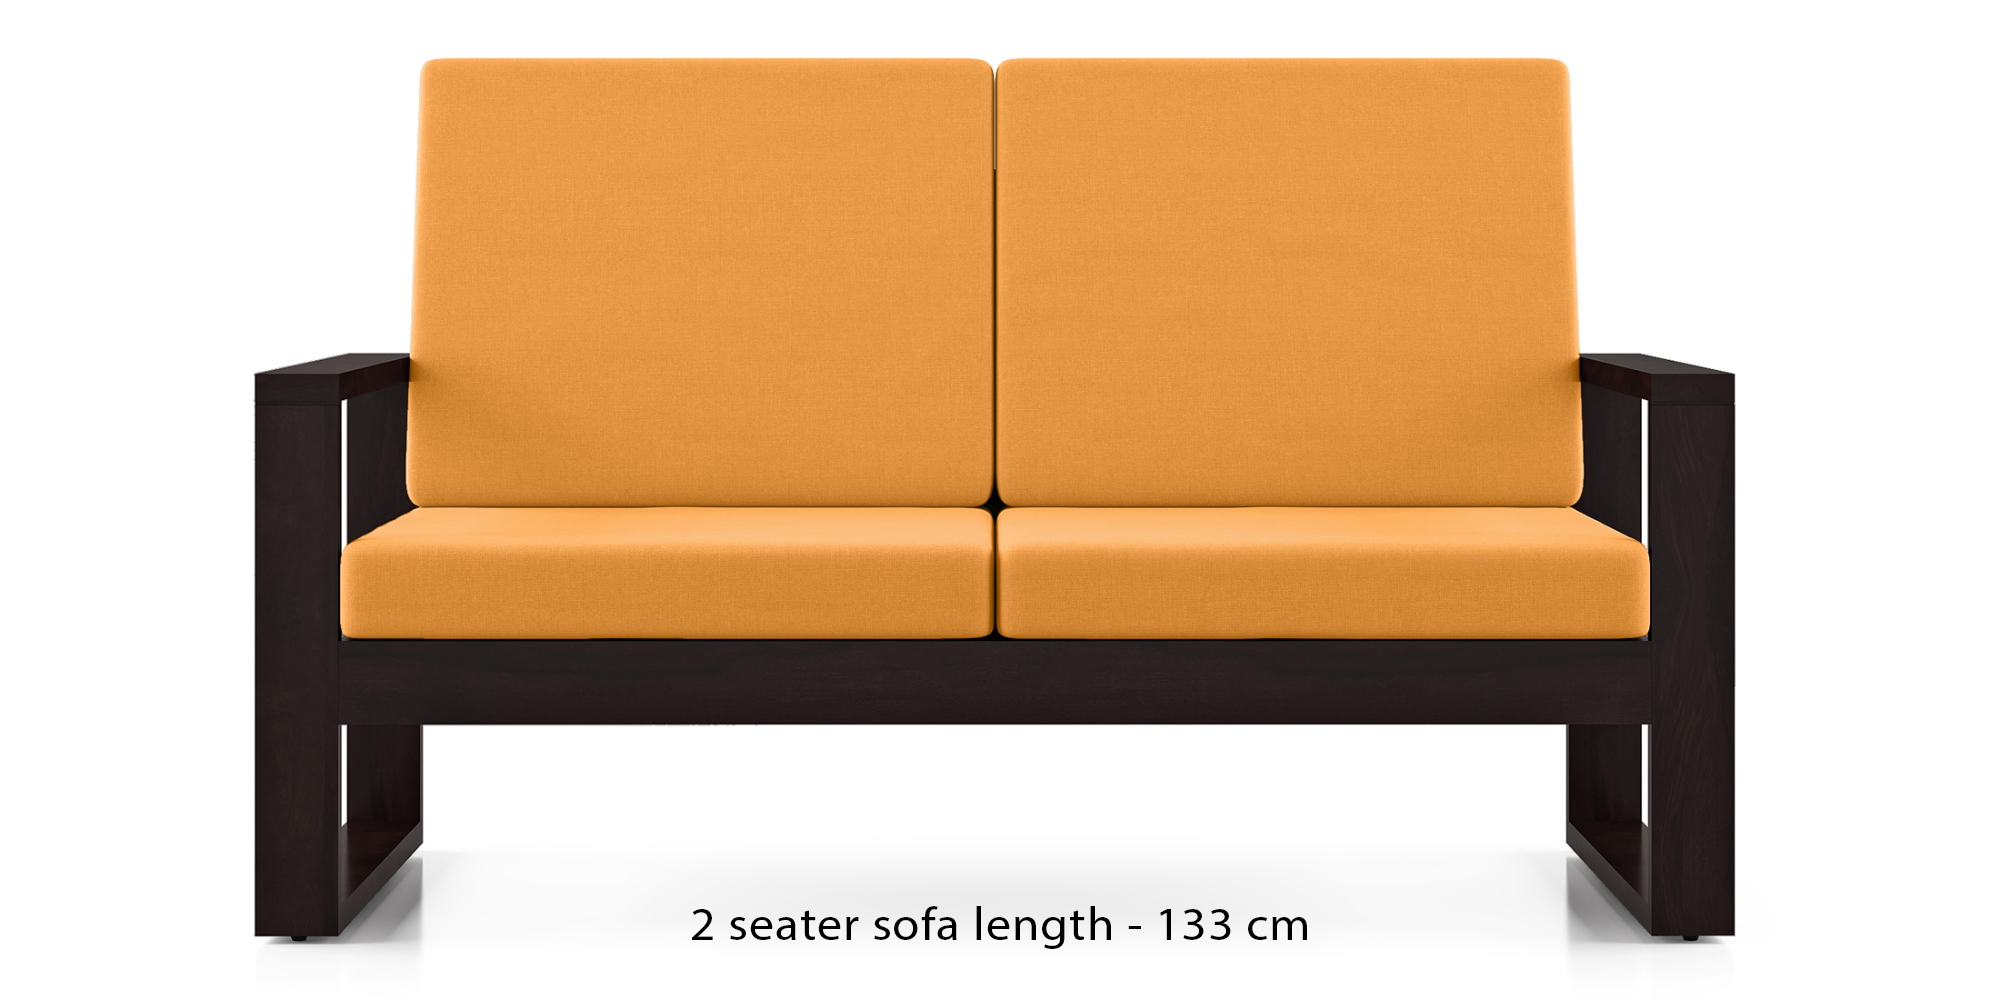 Eileen Wooden Sofa (Harvest Yellow) (1-seater Custom Set - Sofas, None Standard Set - Sofas, Fabric Sofa Material, Regular Sofa Size, Regular Sofa Type, Harvest Yellow) by Urban Ladder - - 613922